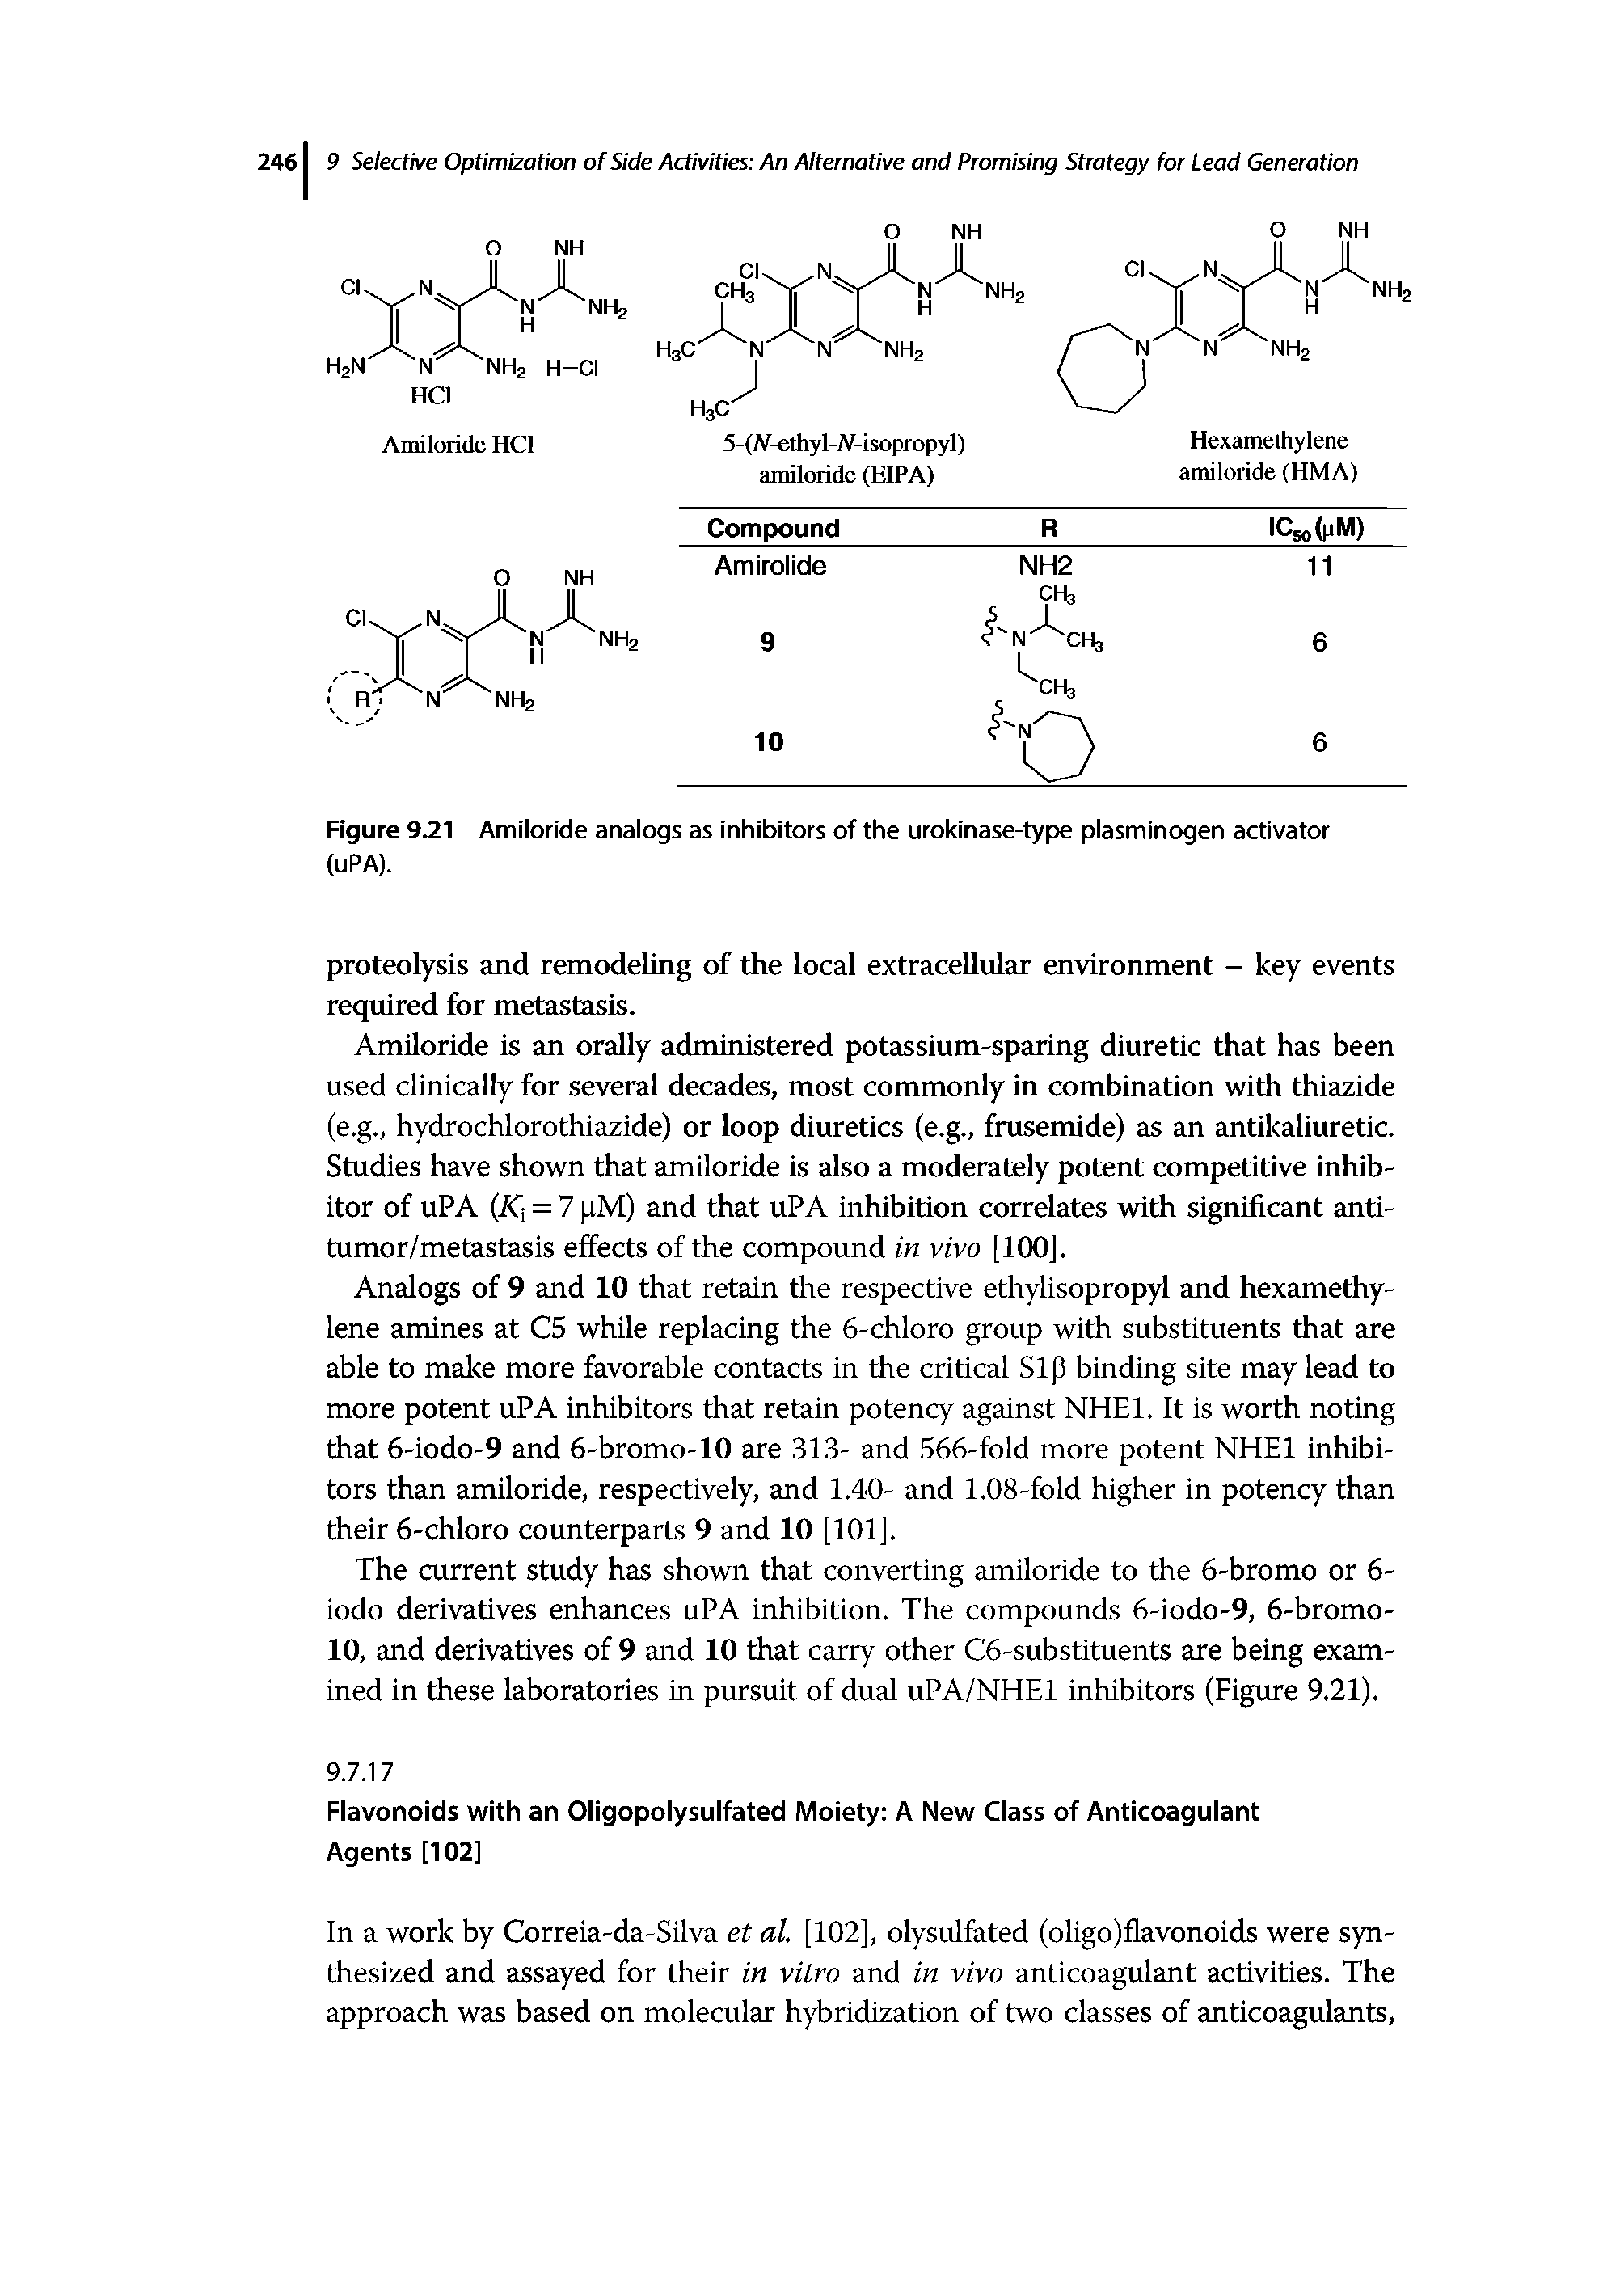 Figure 9 1 Amiloride analogs as inhibitors of the urokinase-type plasminogen activator (uPA).